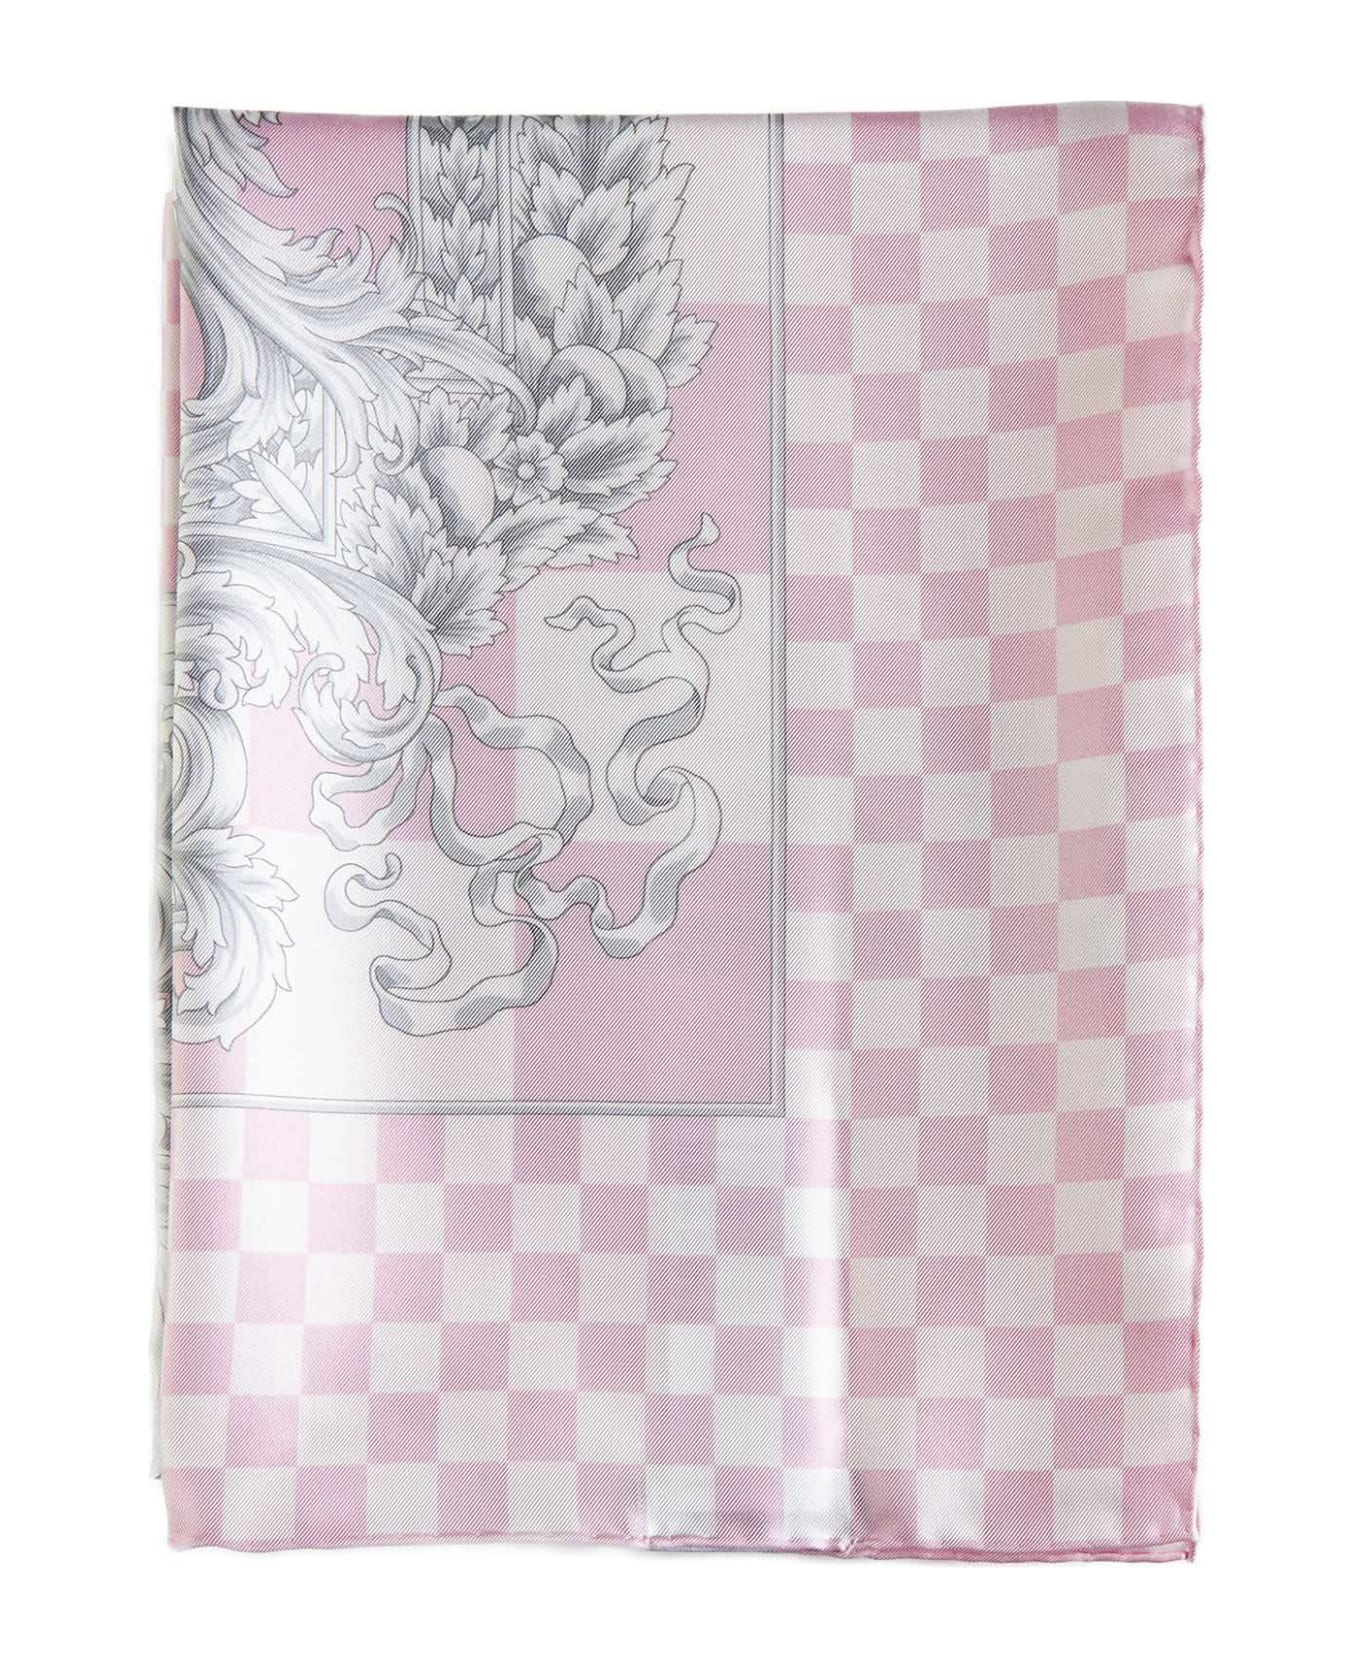 Versace Scarf - Pastel pink + white + silver